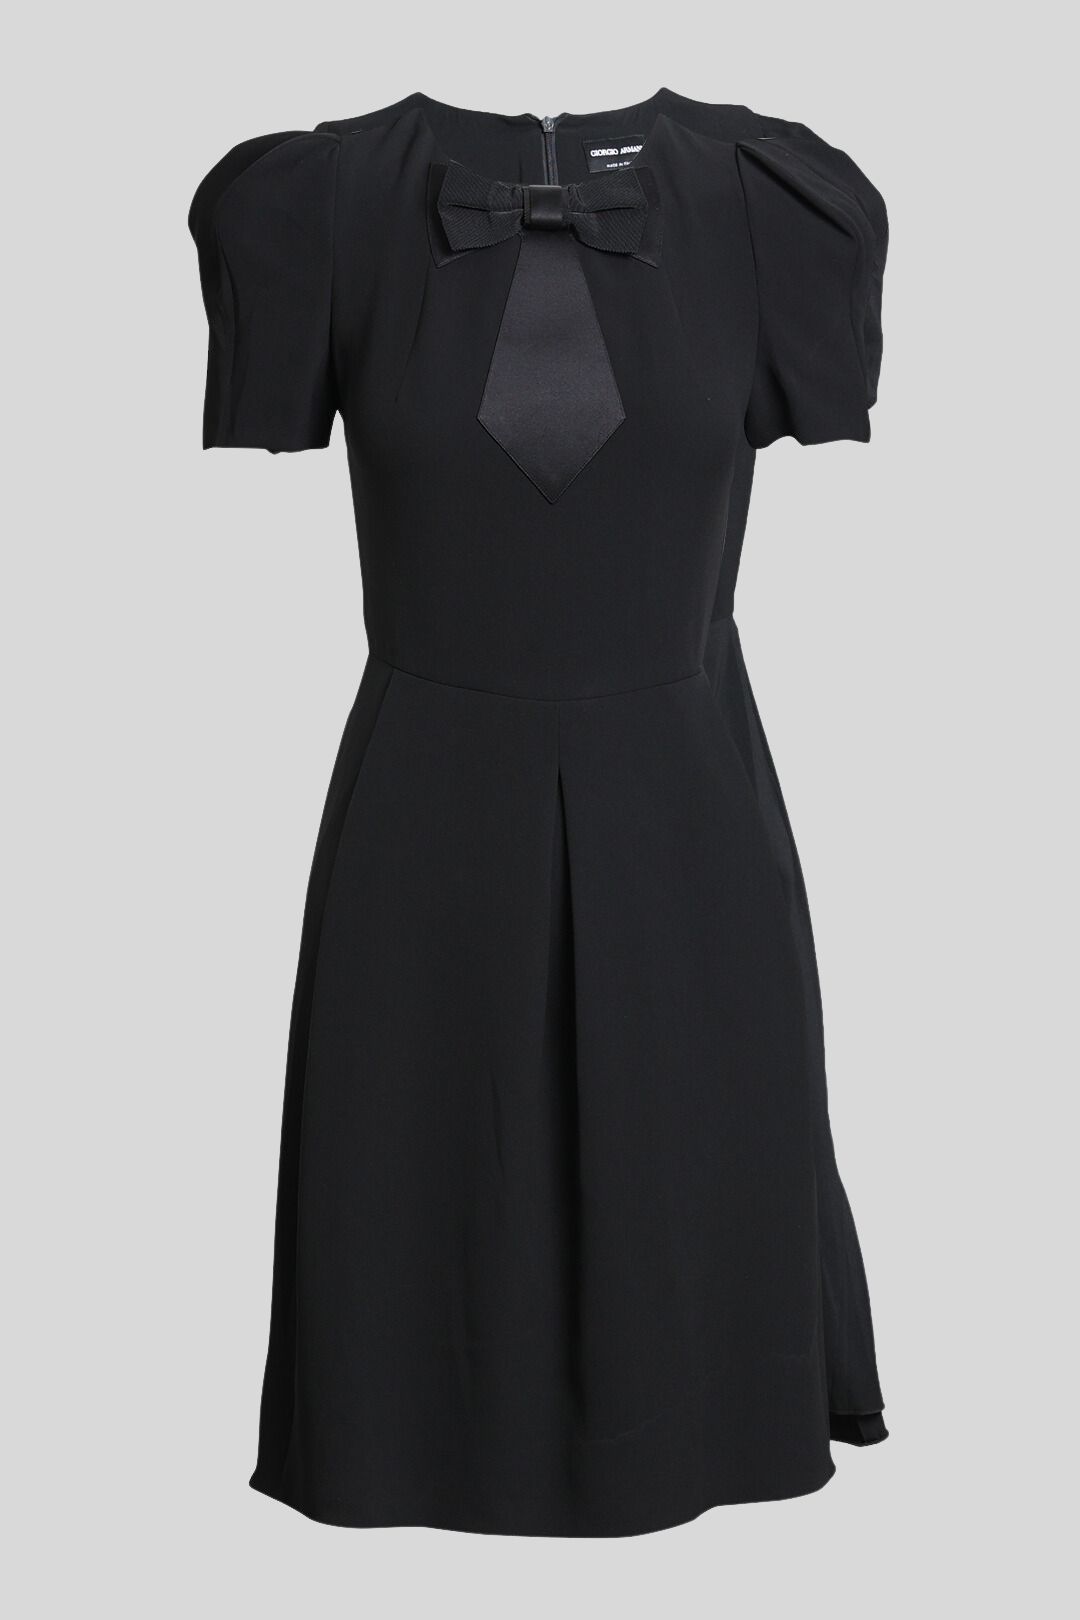 Giorgio Armani Black Silk Knee Length Dress